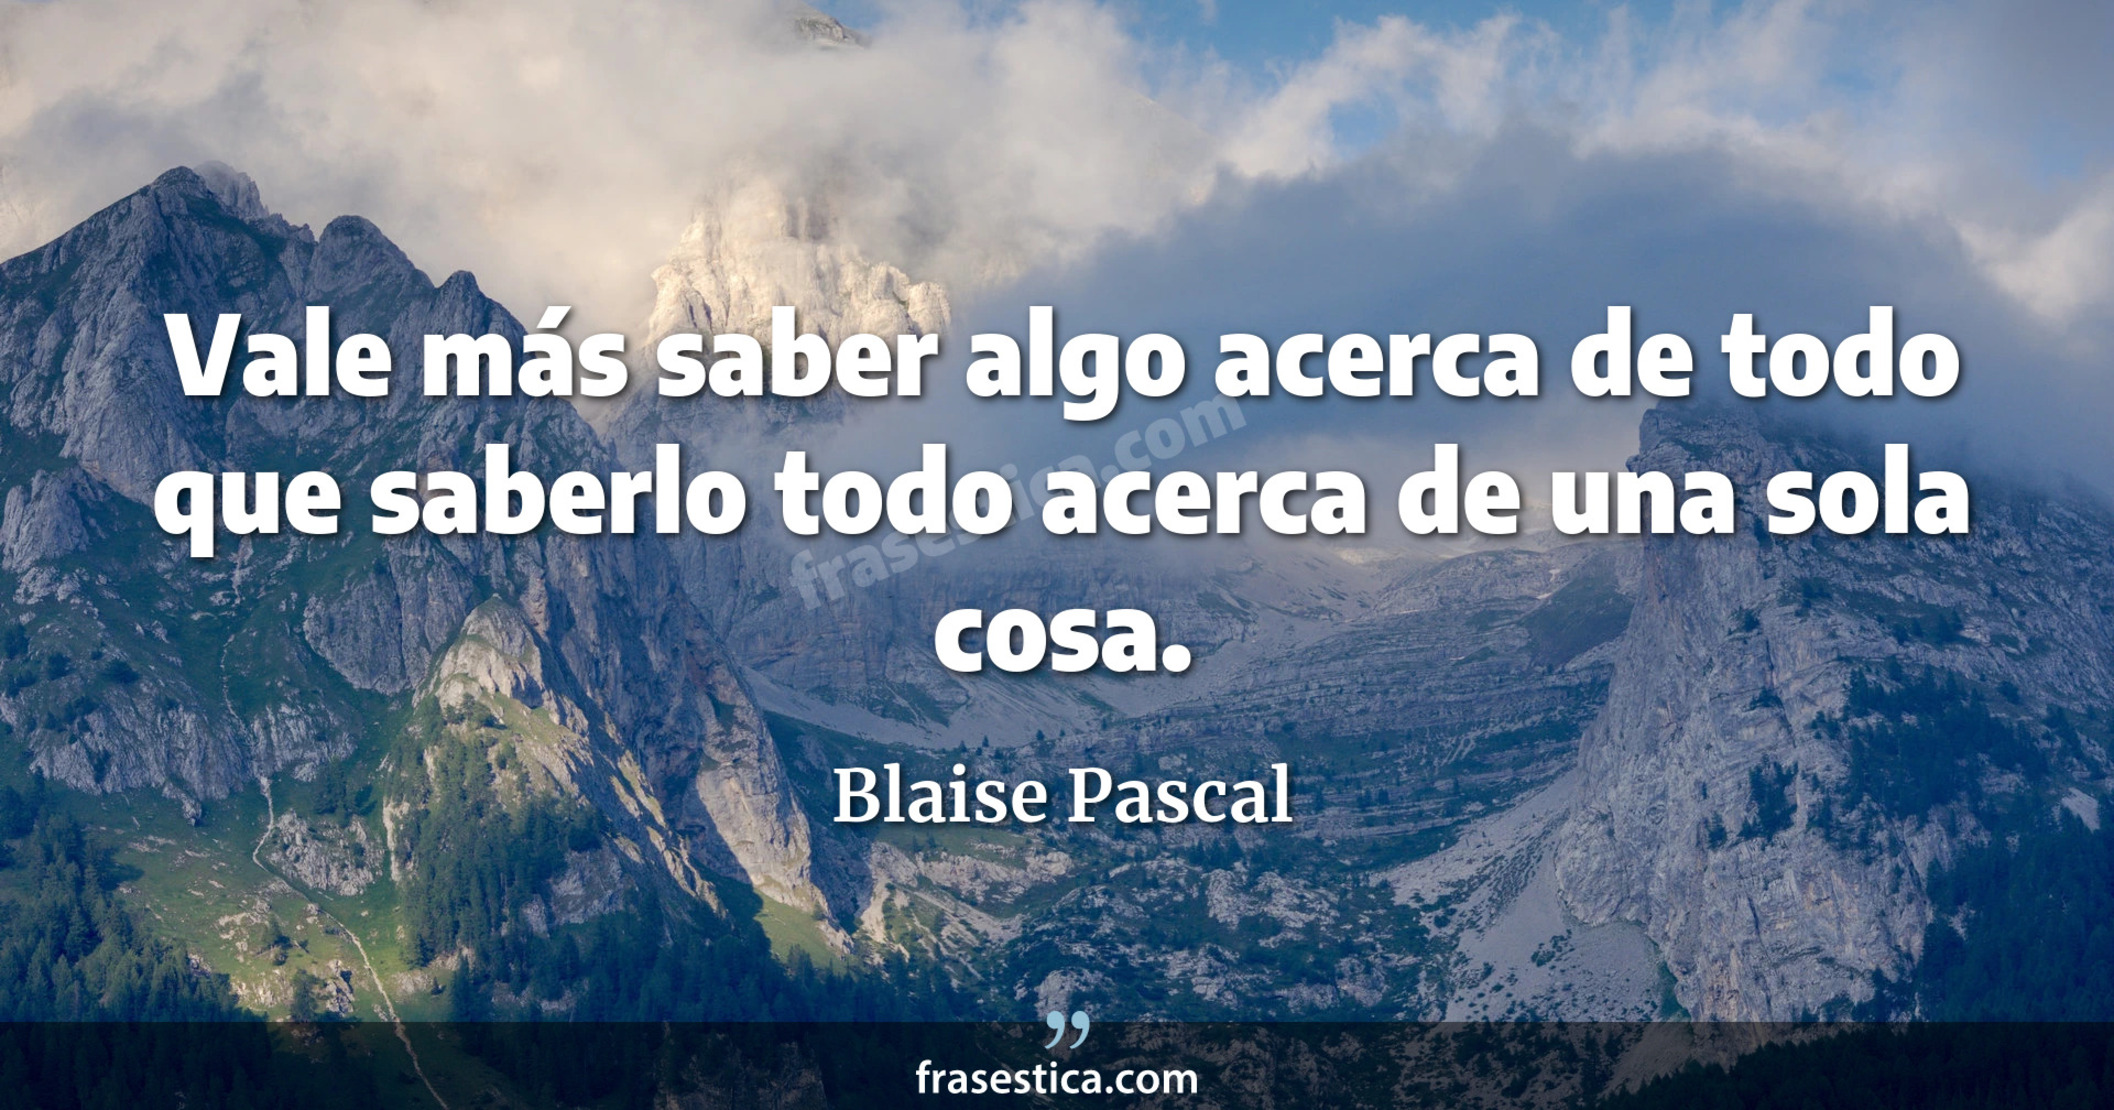 Vale más saber algo acerca de todo que saberlo todo acerca de una sola cosa. - Blaise Pascal